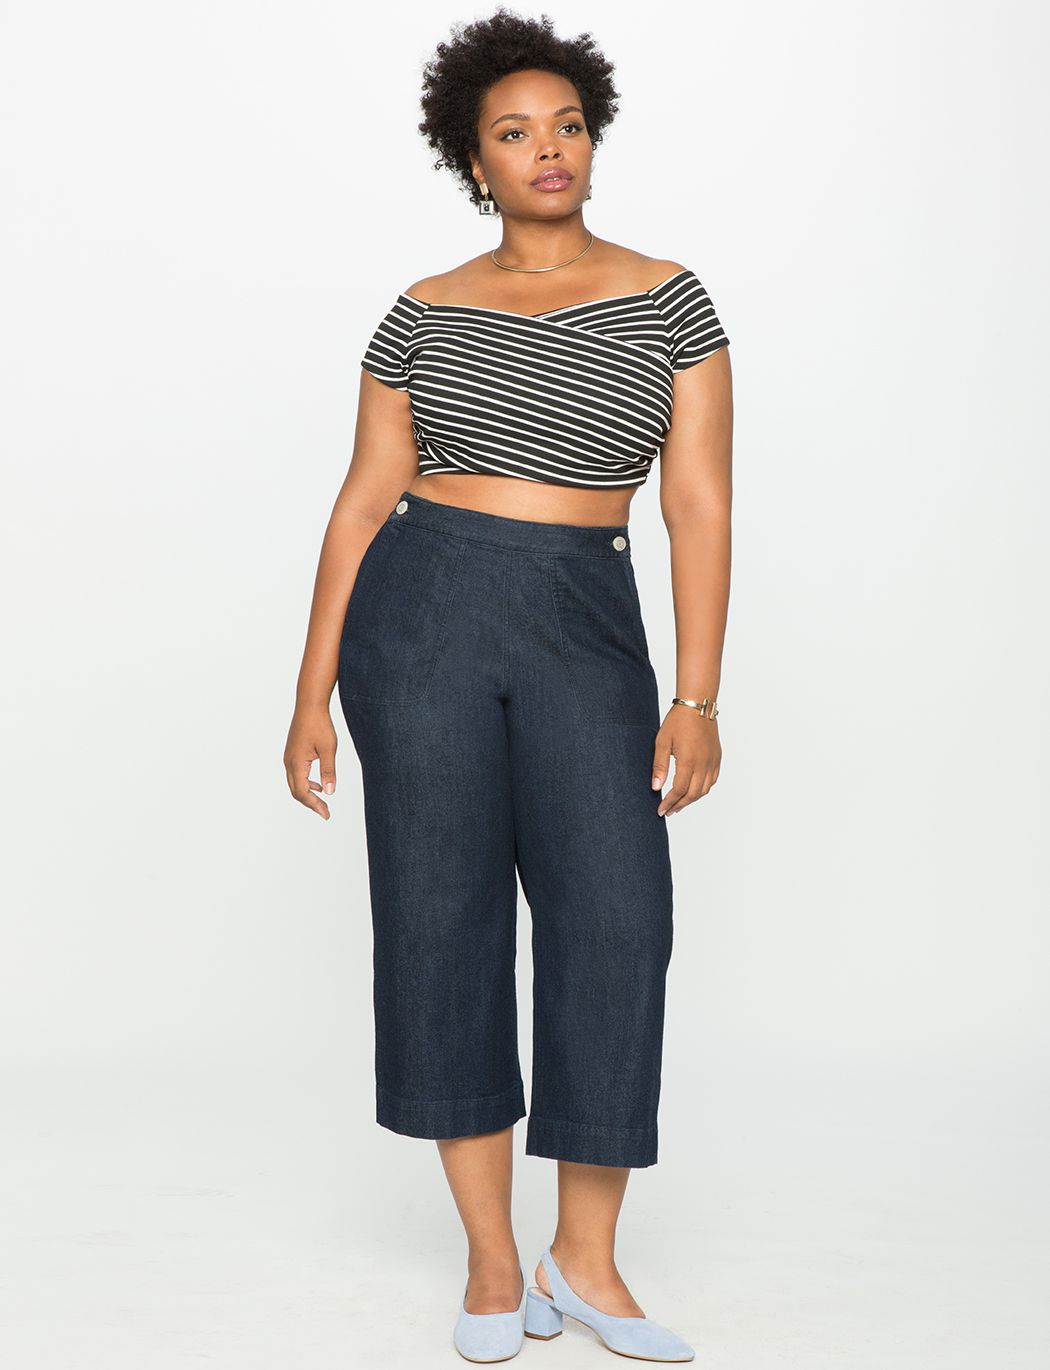 A model in culottes and a striped crop top